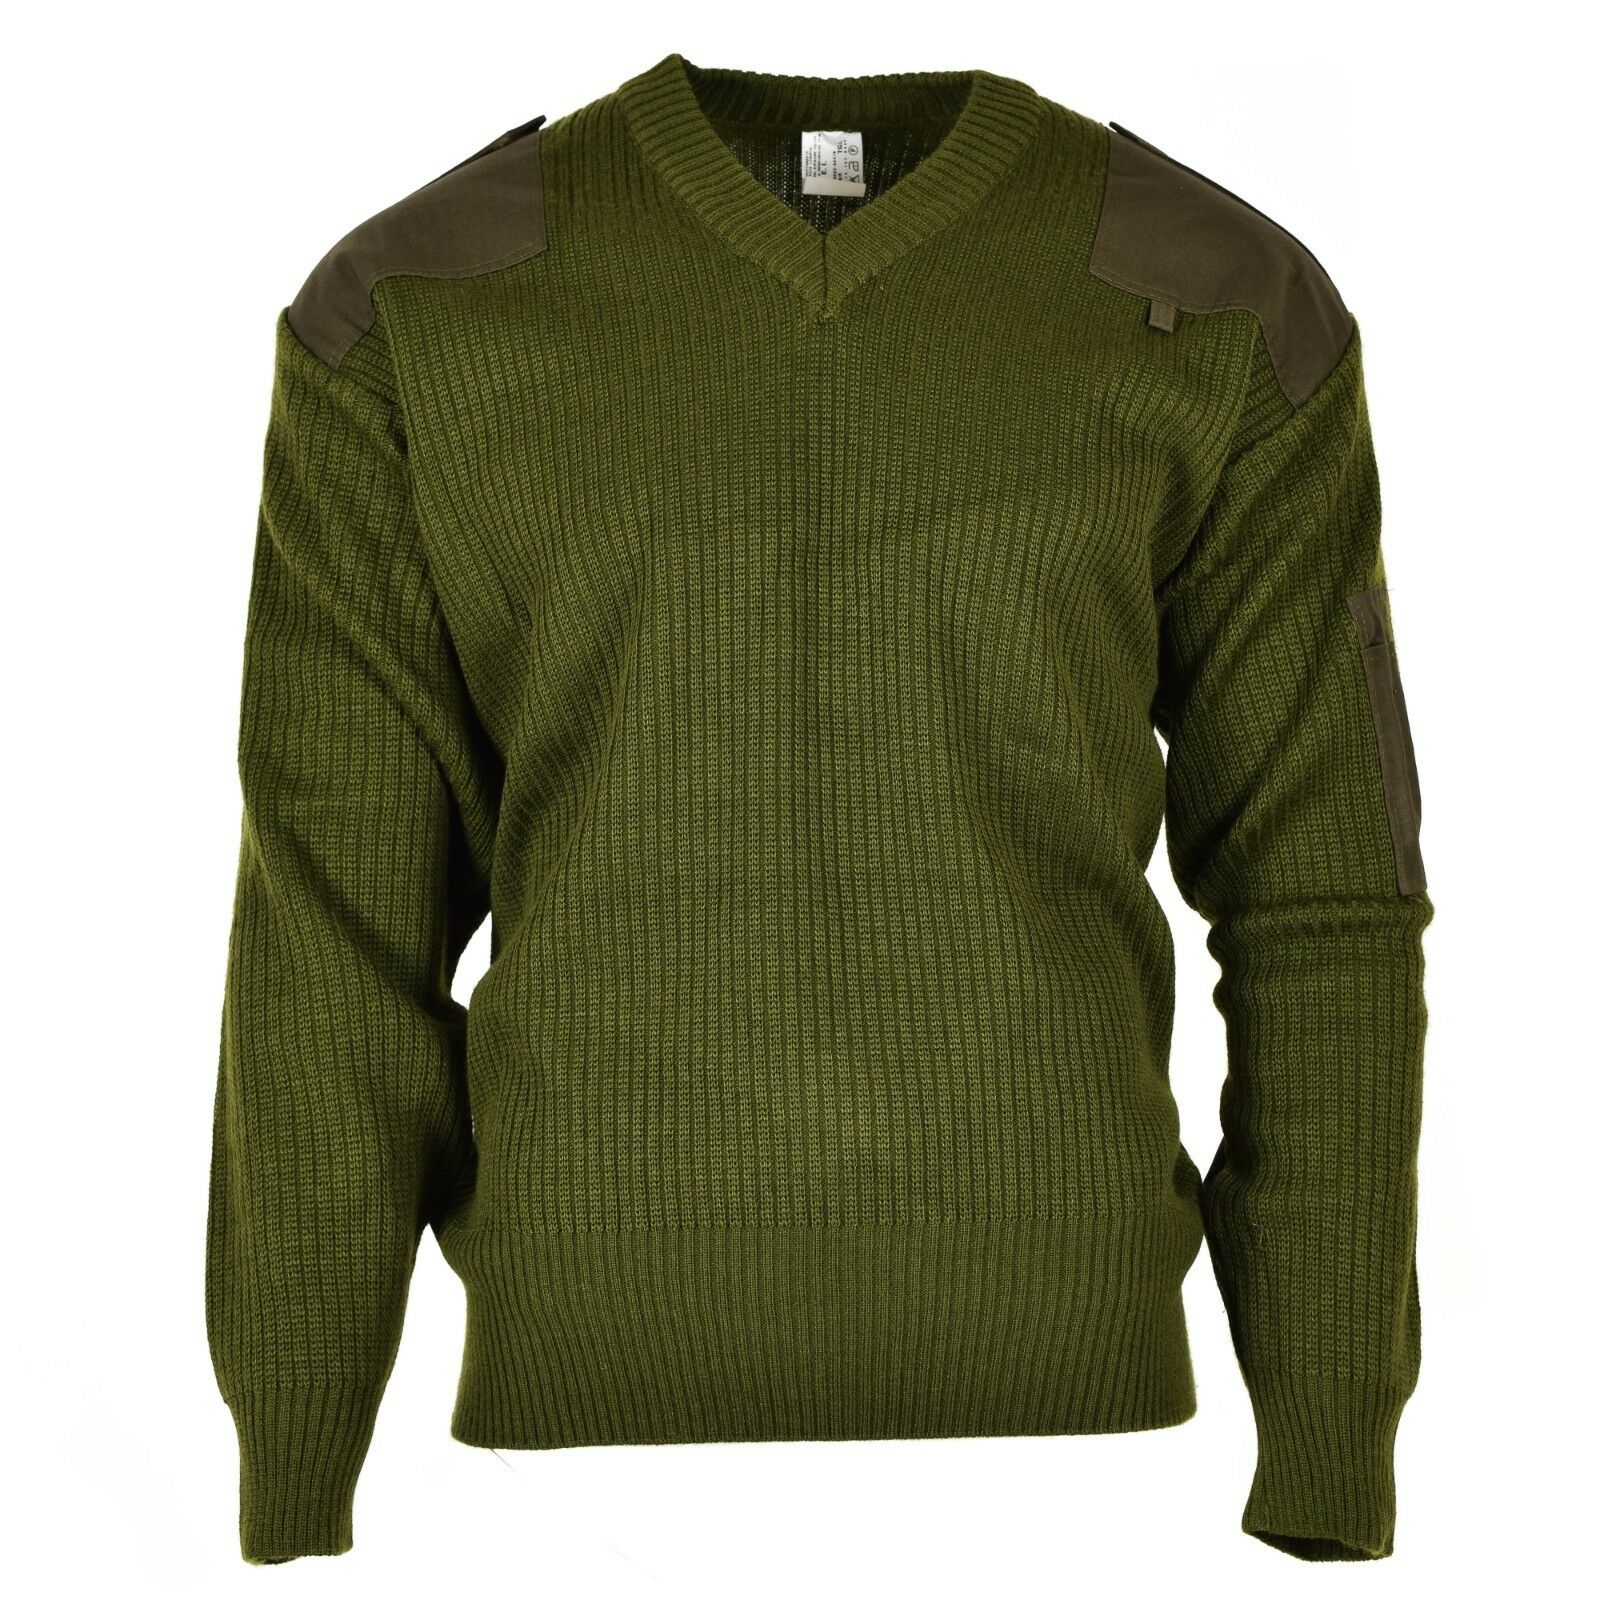 Original Italian Army Pullover Commando Jumper Green Wool V-neck Sweater New